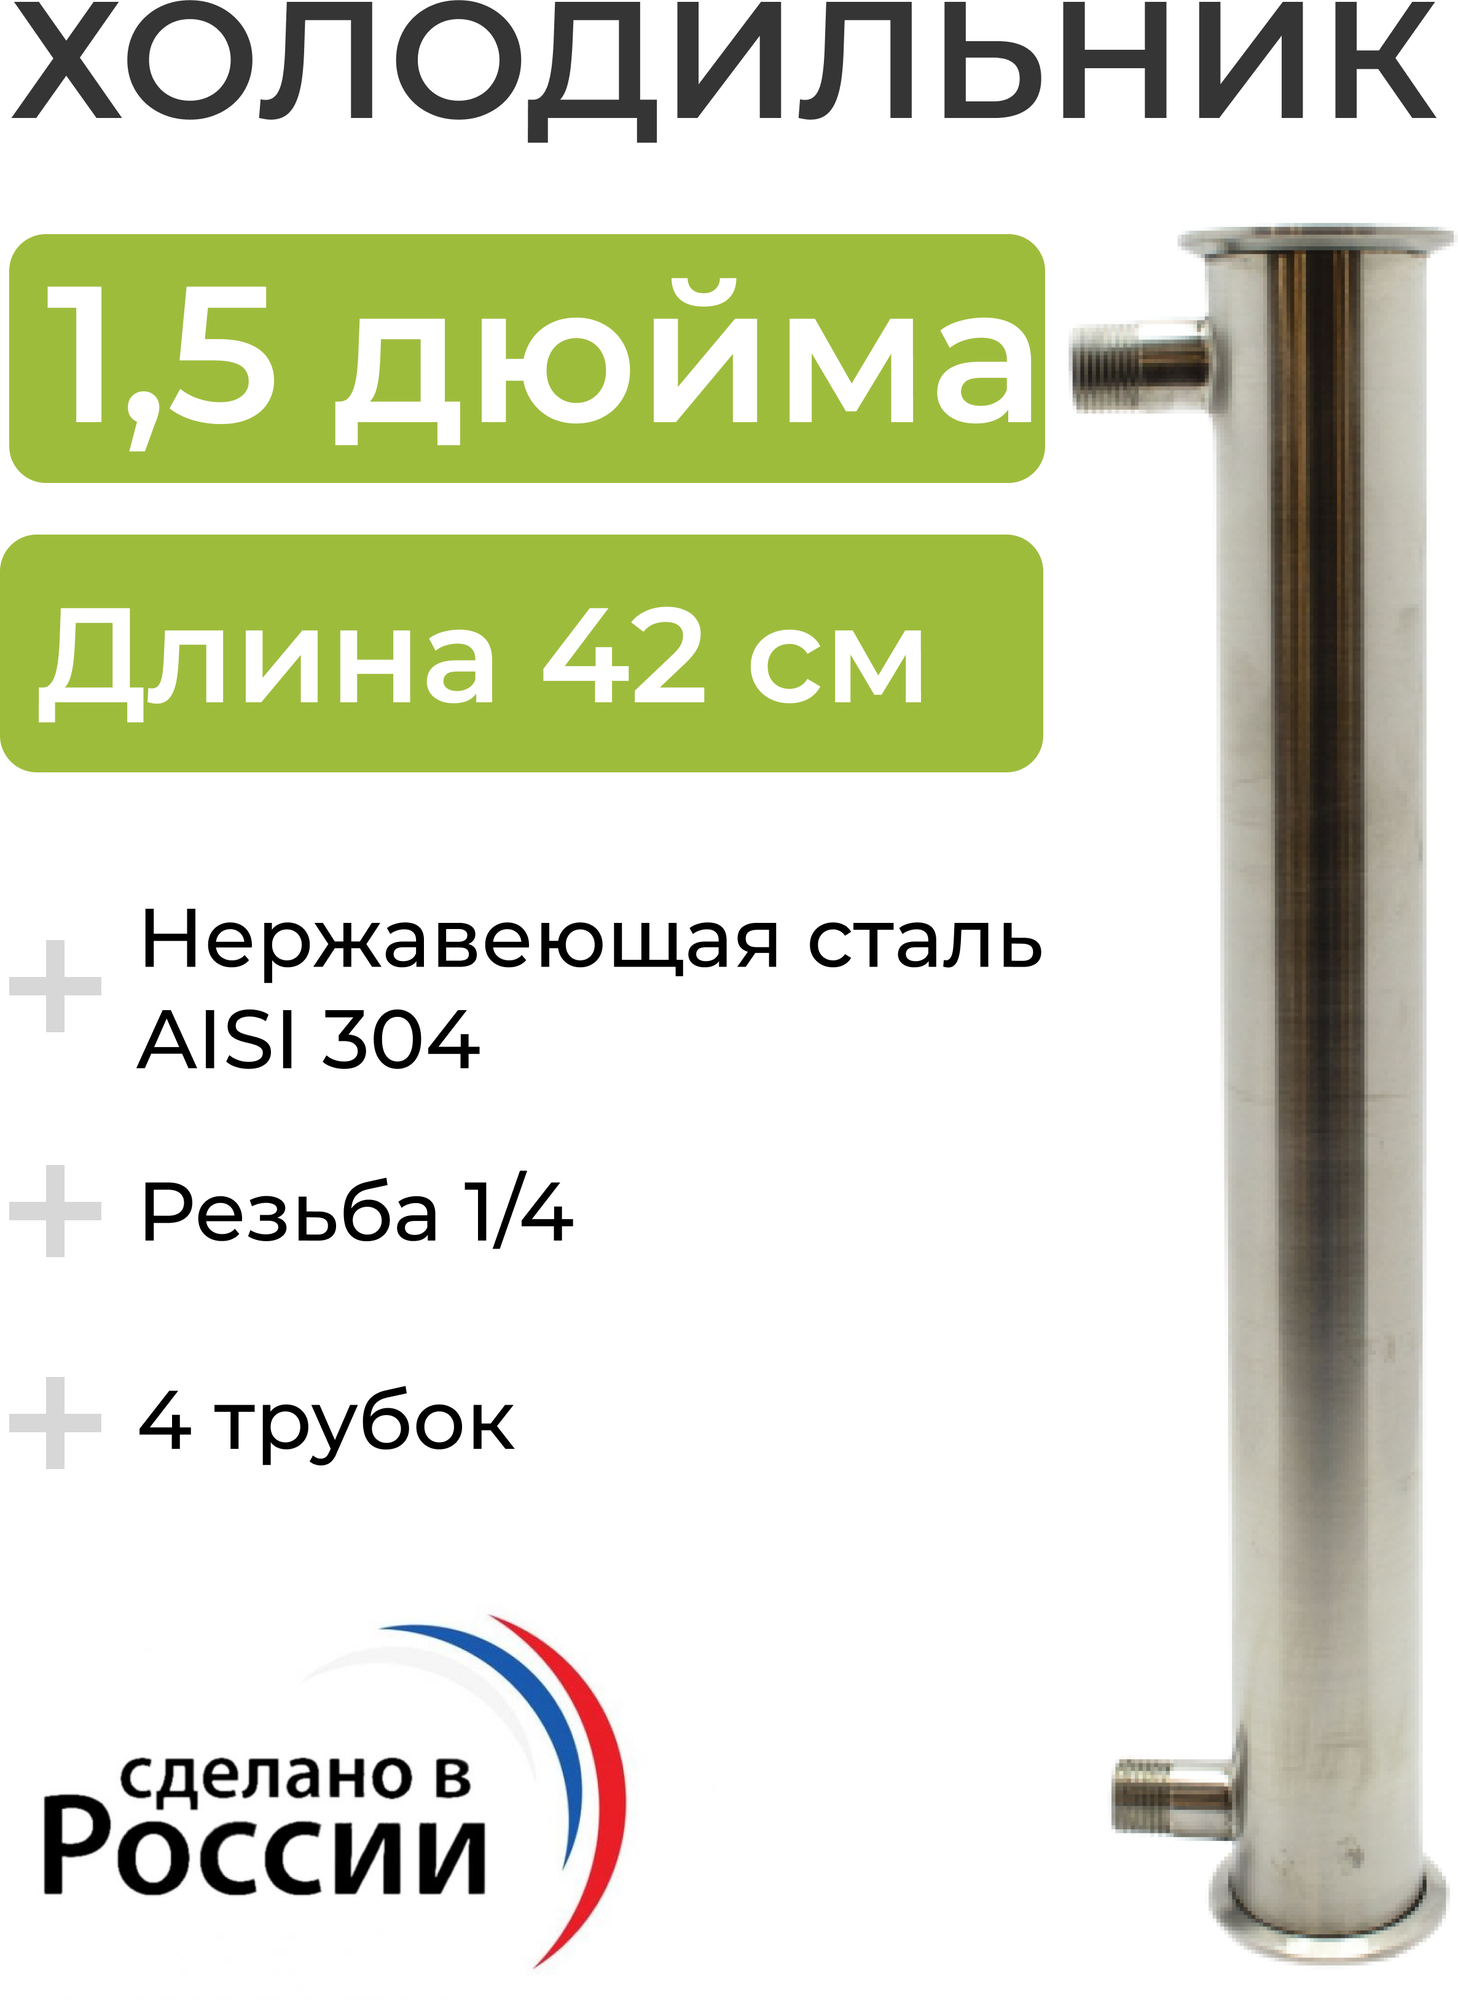 Холодильник (дефлегматор) под кламп 1,5 дюйма, 42 см (4 трубки, 8 мм) выход под воду штуцер 1/4